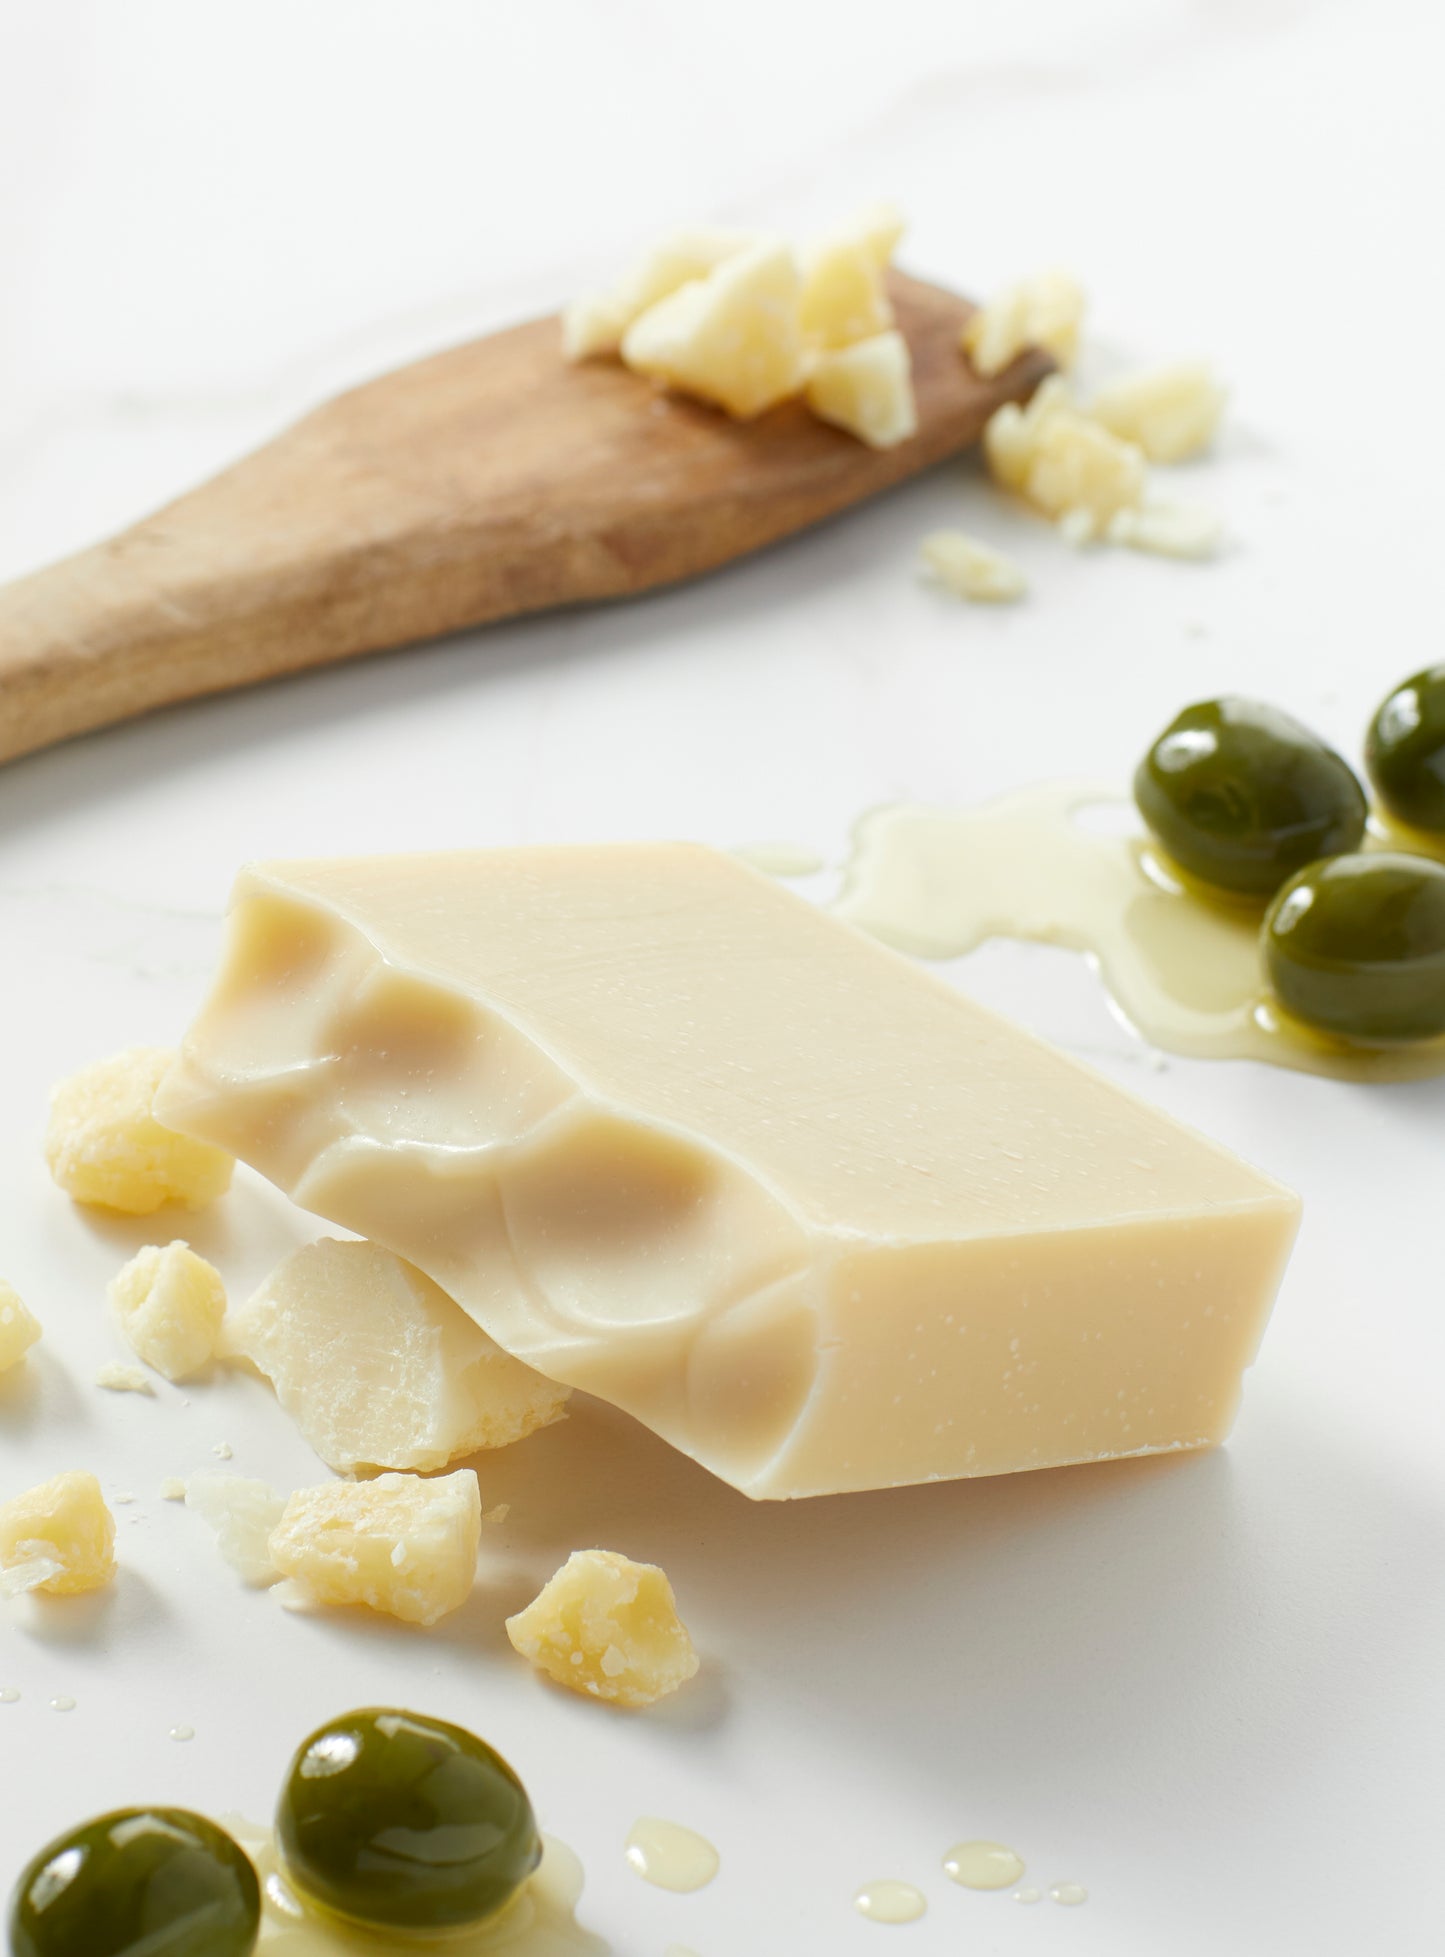 - Savon - Beurre de karité 40% inodore / Unscented 40% Shea butter soap